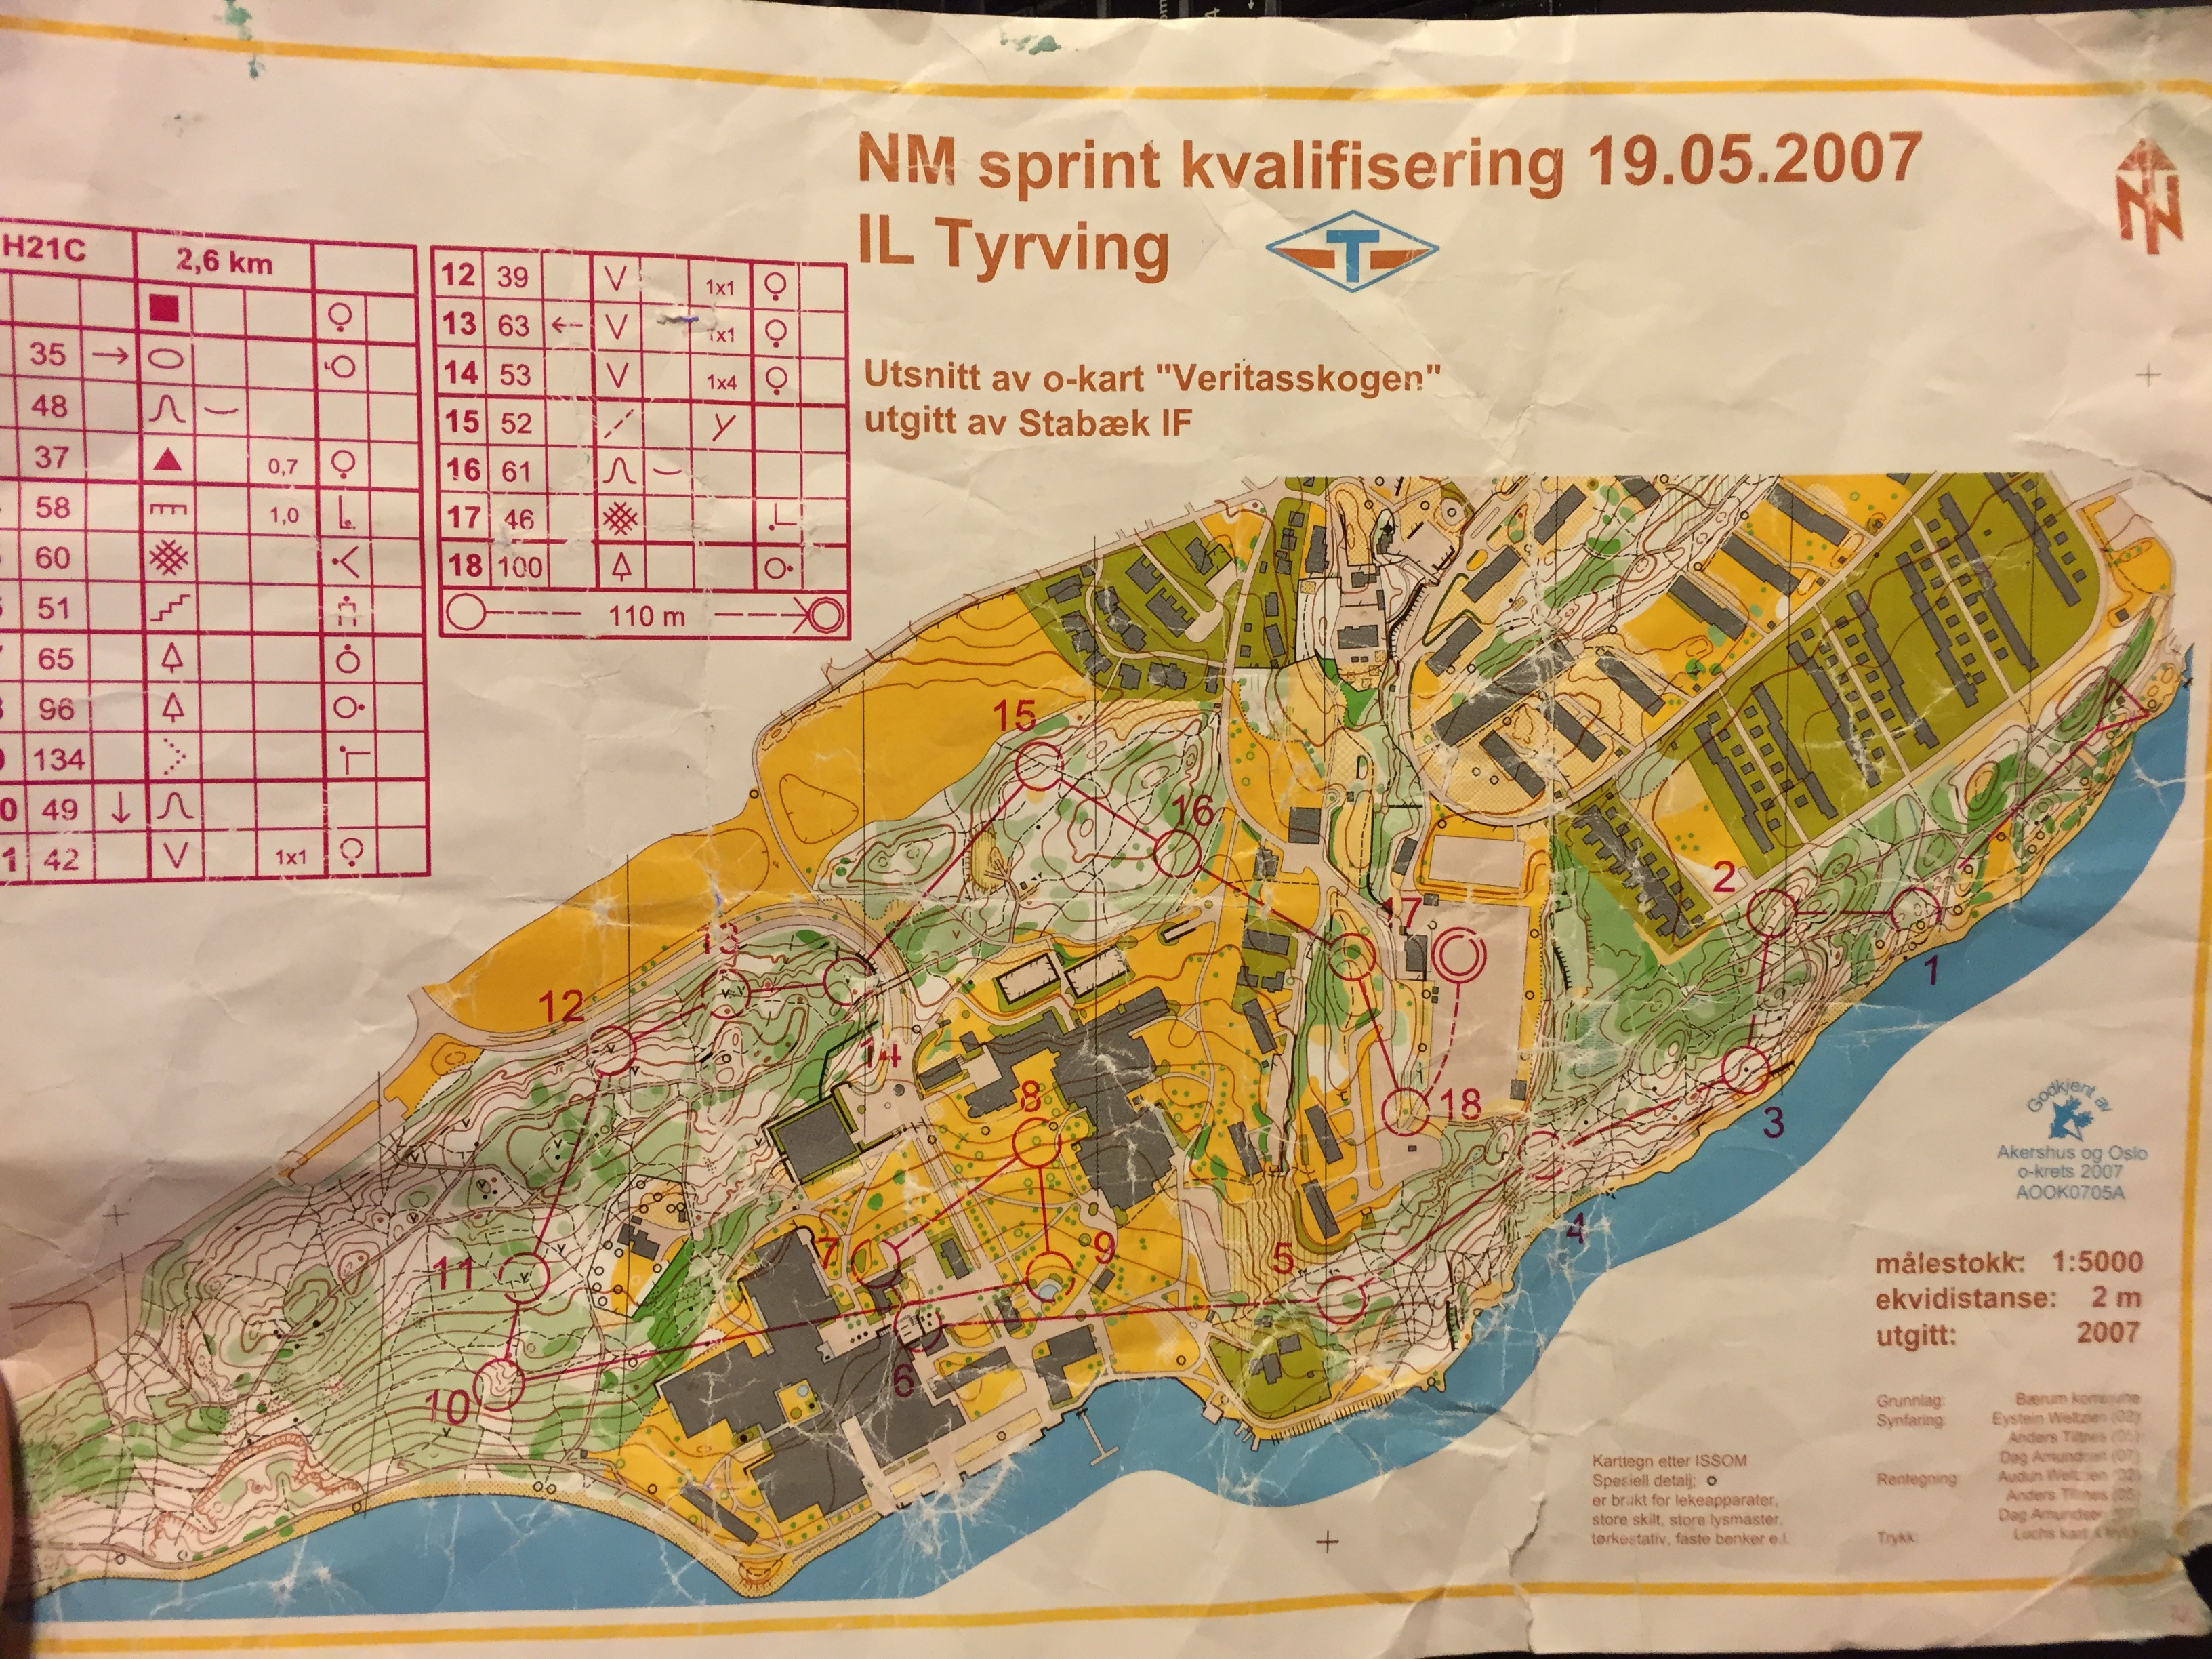 NM Sprint Kvalifisering 2007 (19.05.2007)